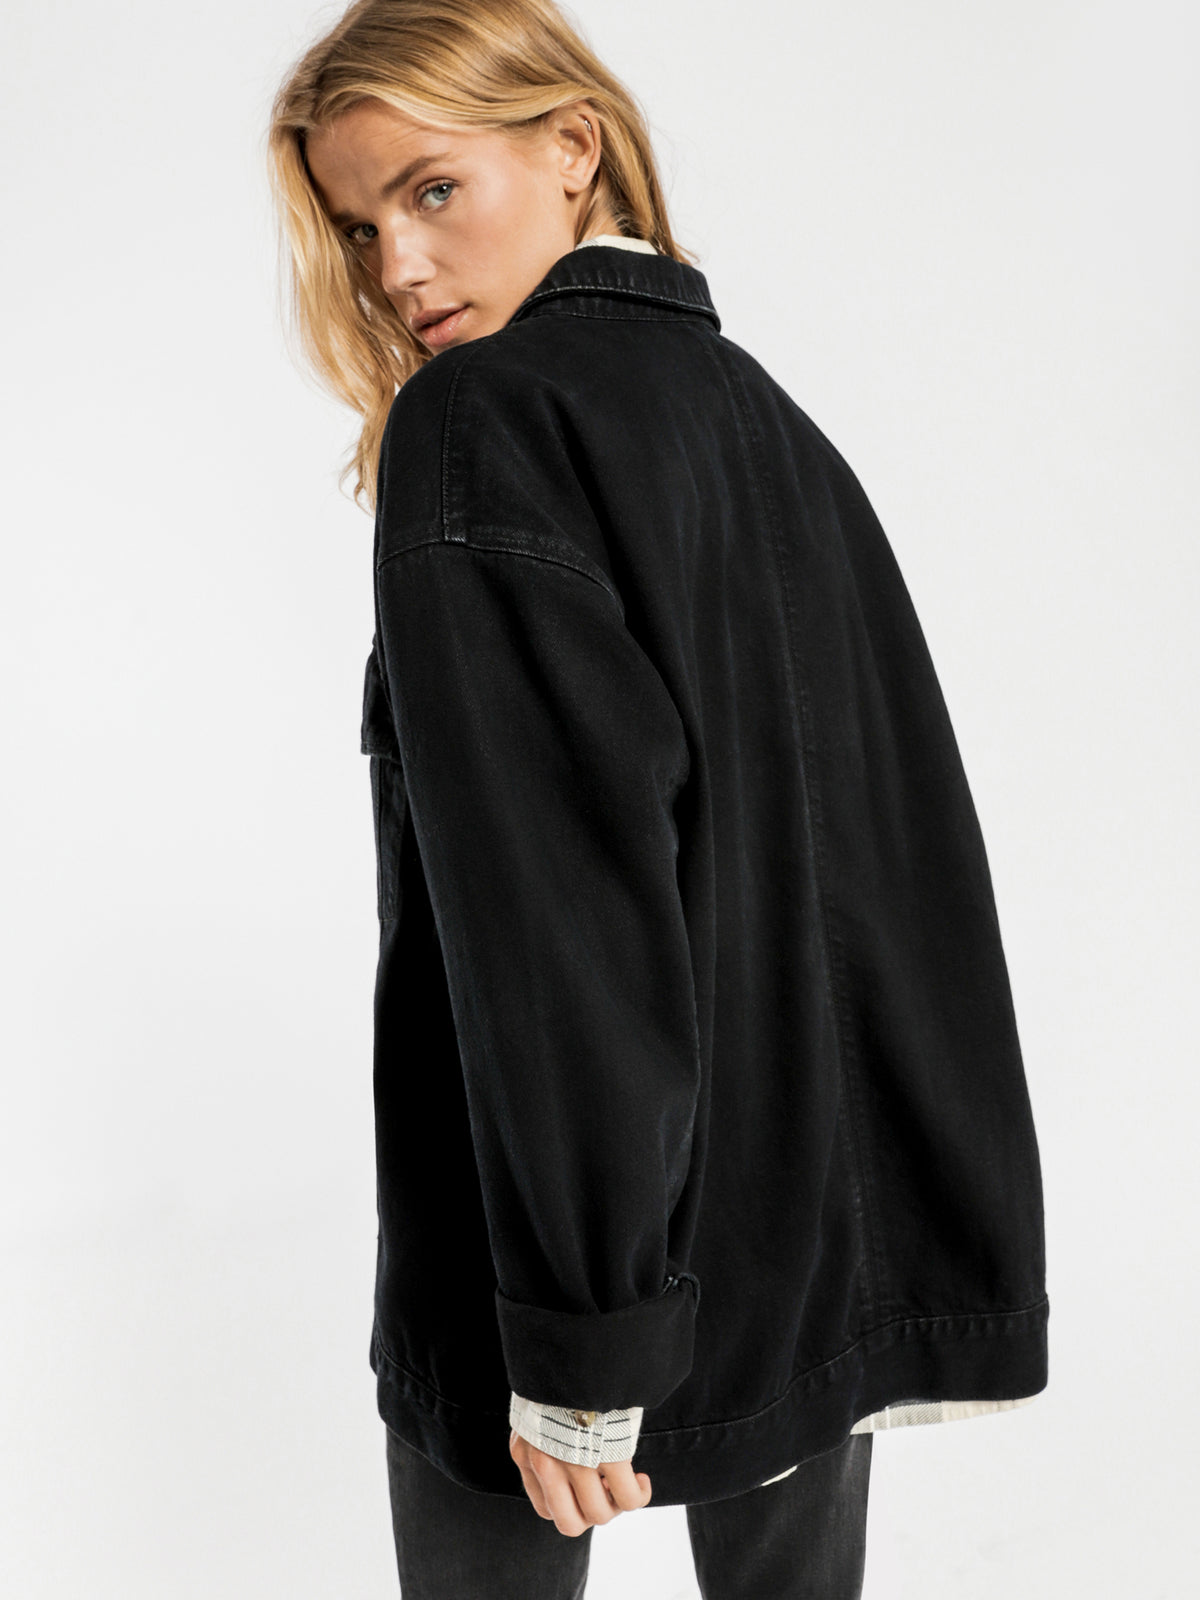 A Supersized Oversized Denim Jacket in Black